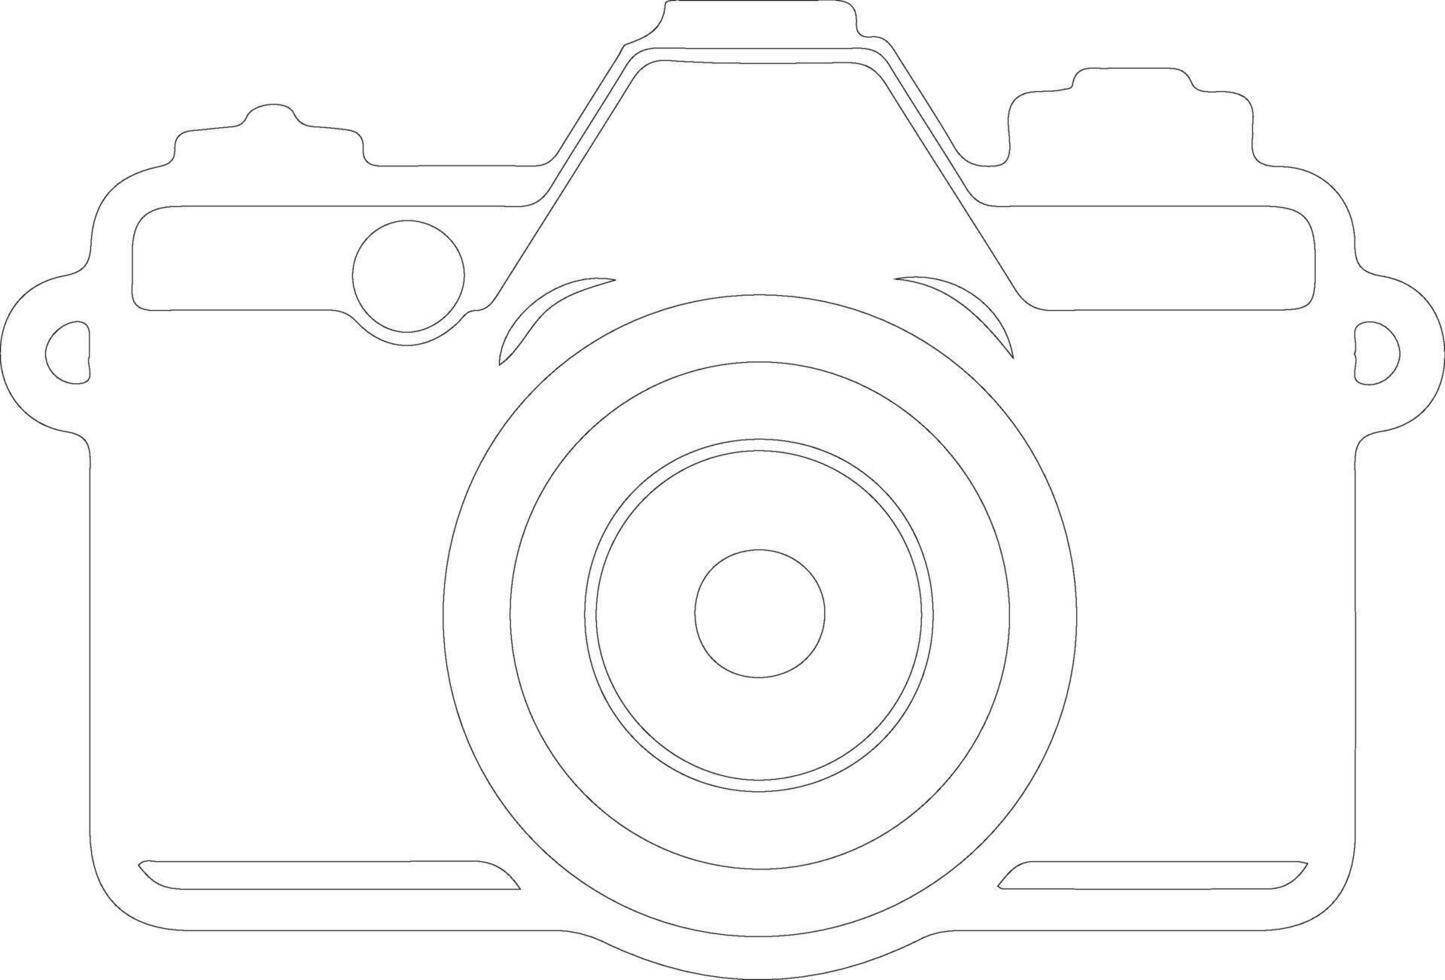 Camera icon  outline silhouette vector